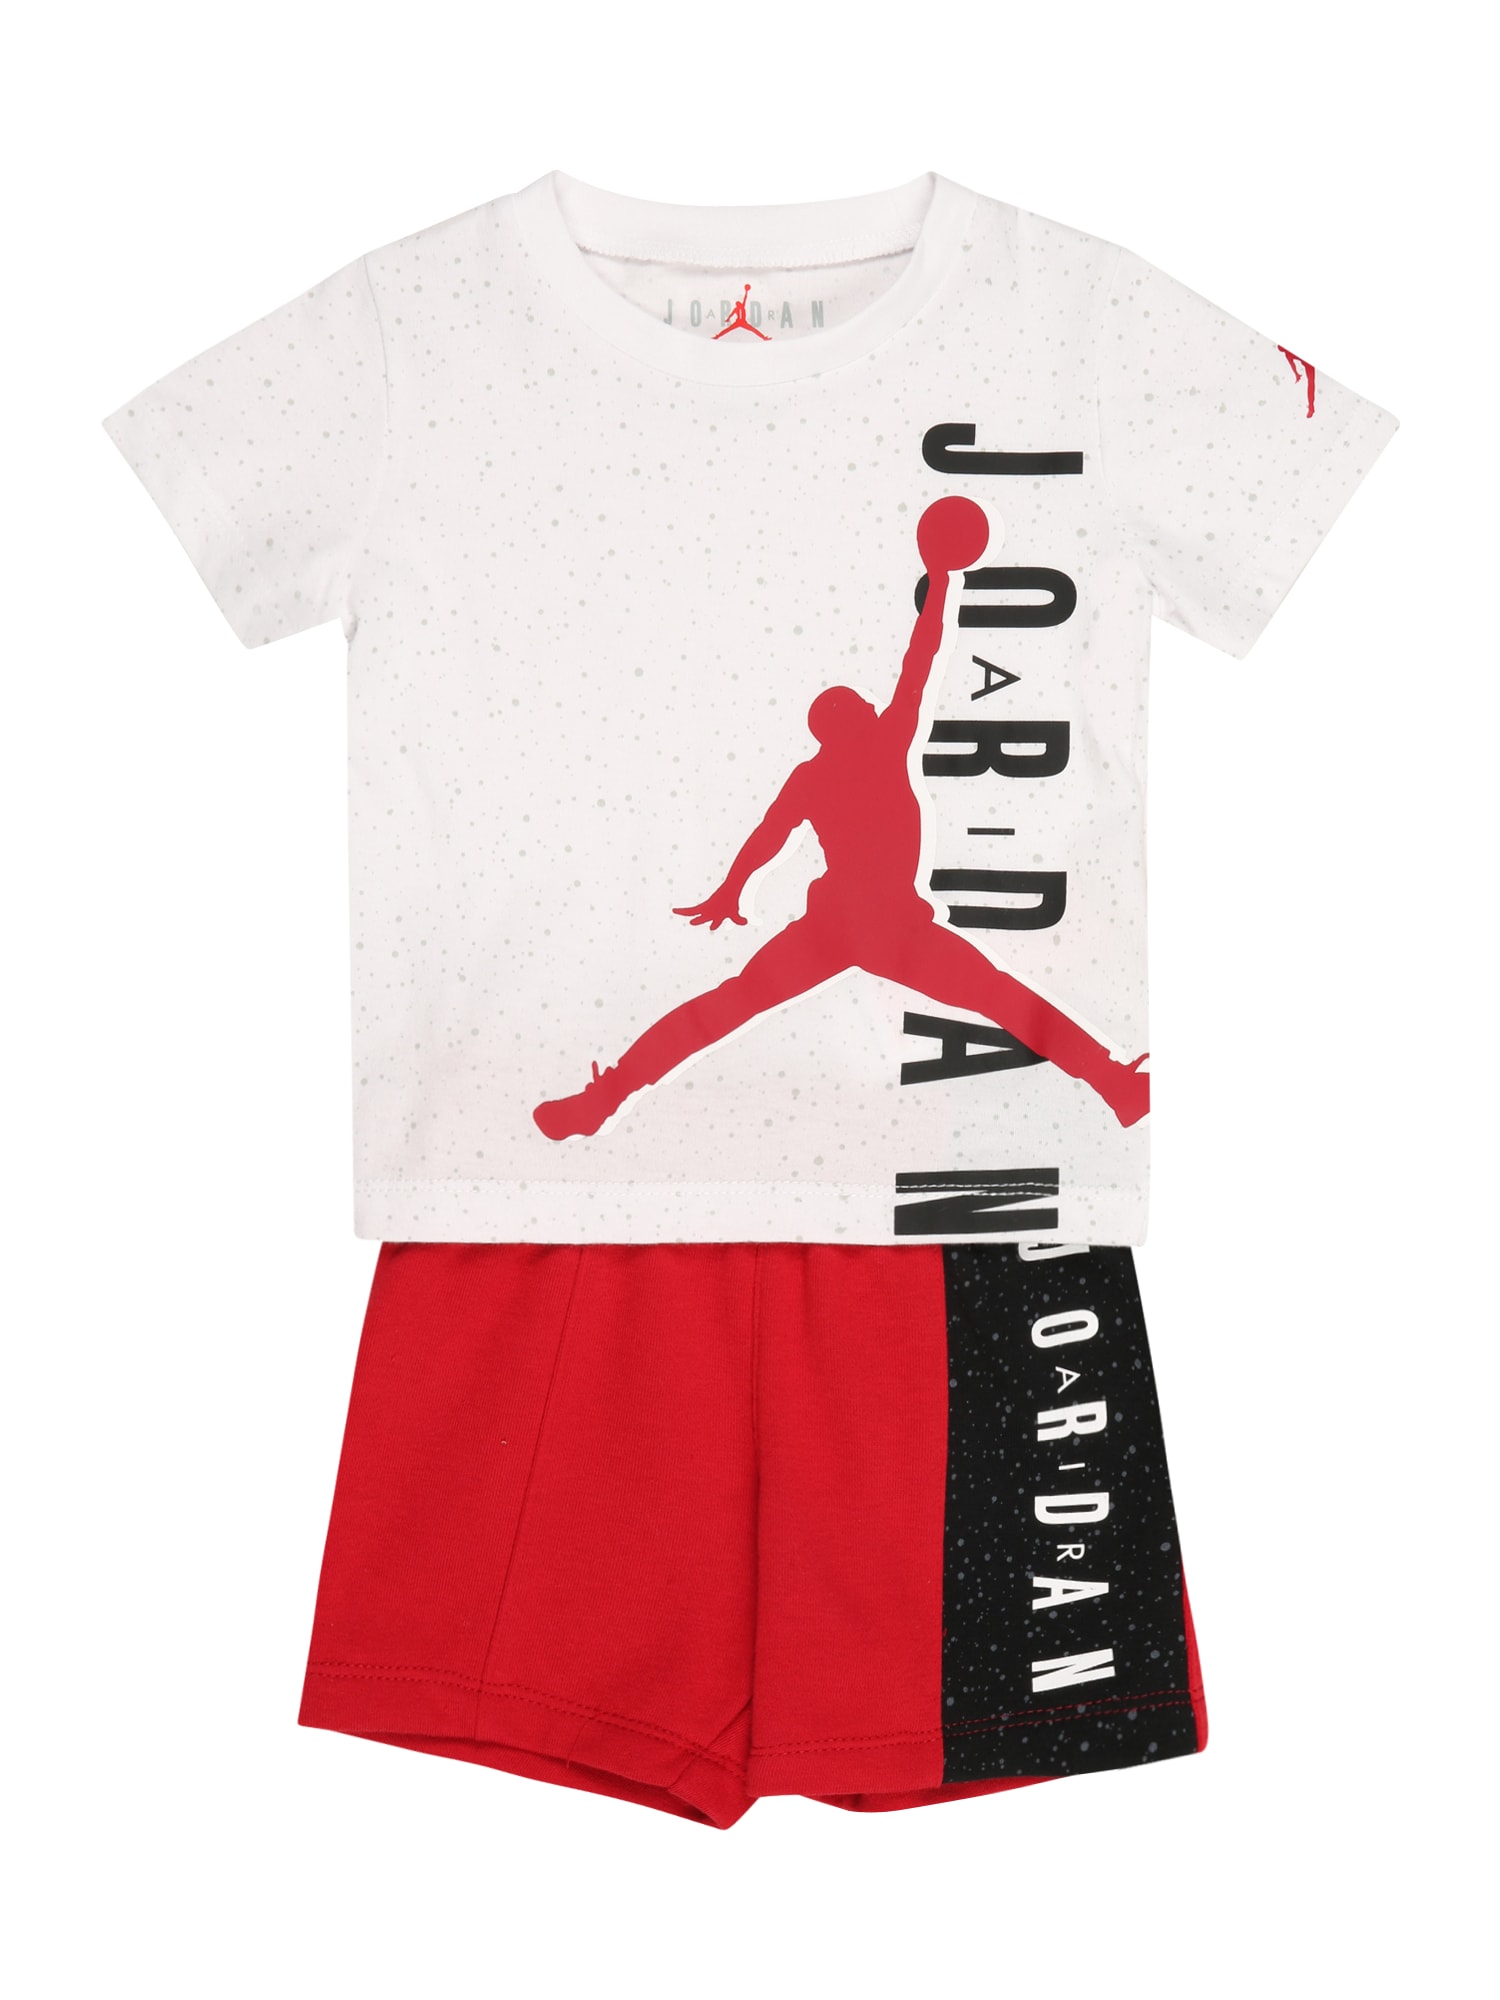 Jordan Jogging ruhák  piros / fehér / fekete